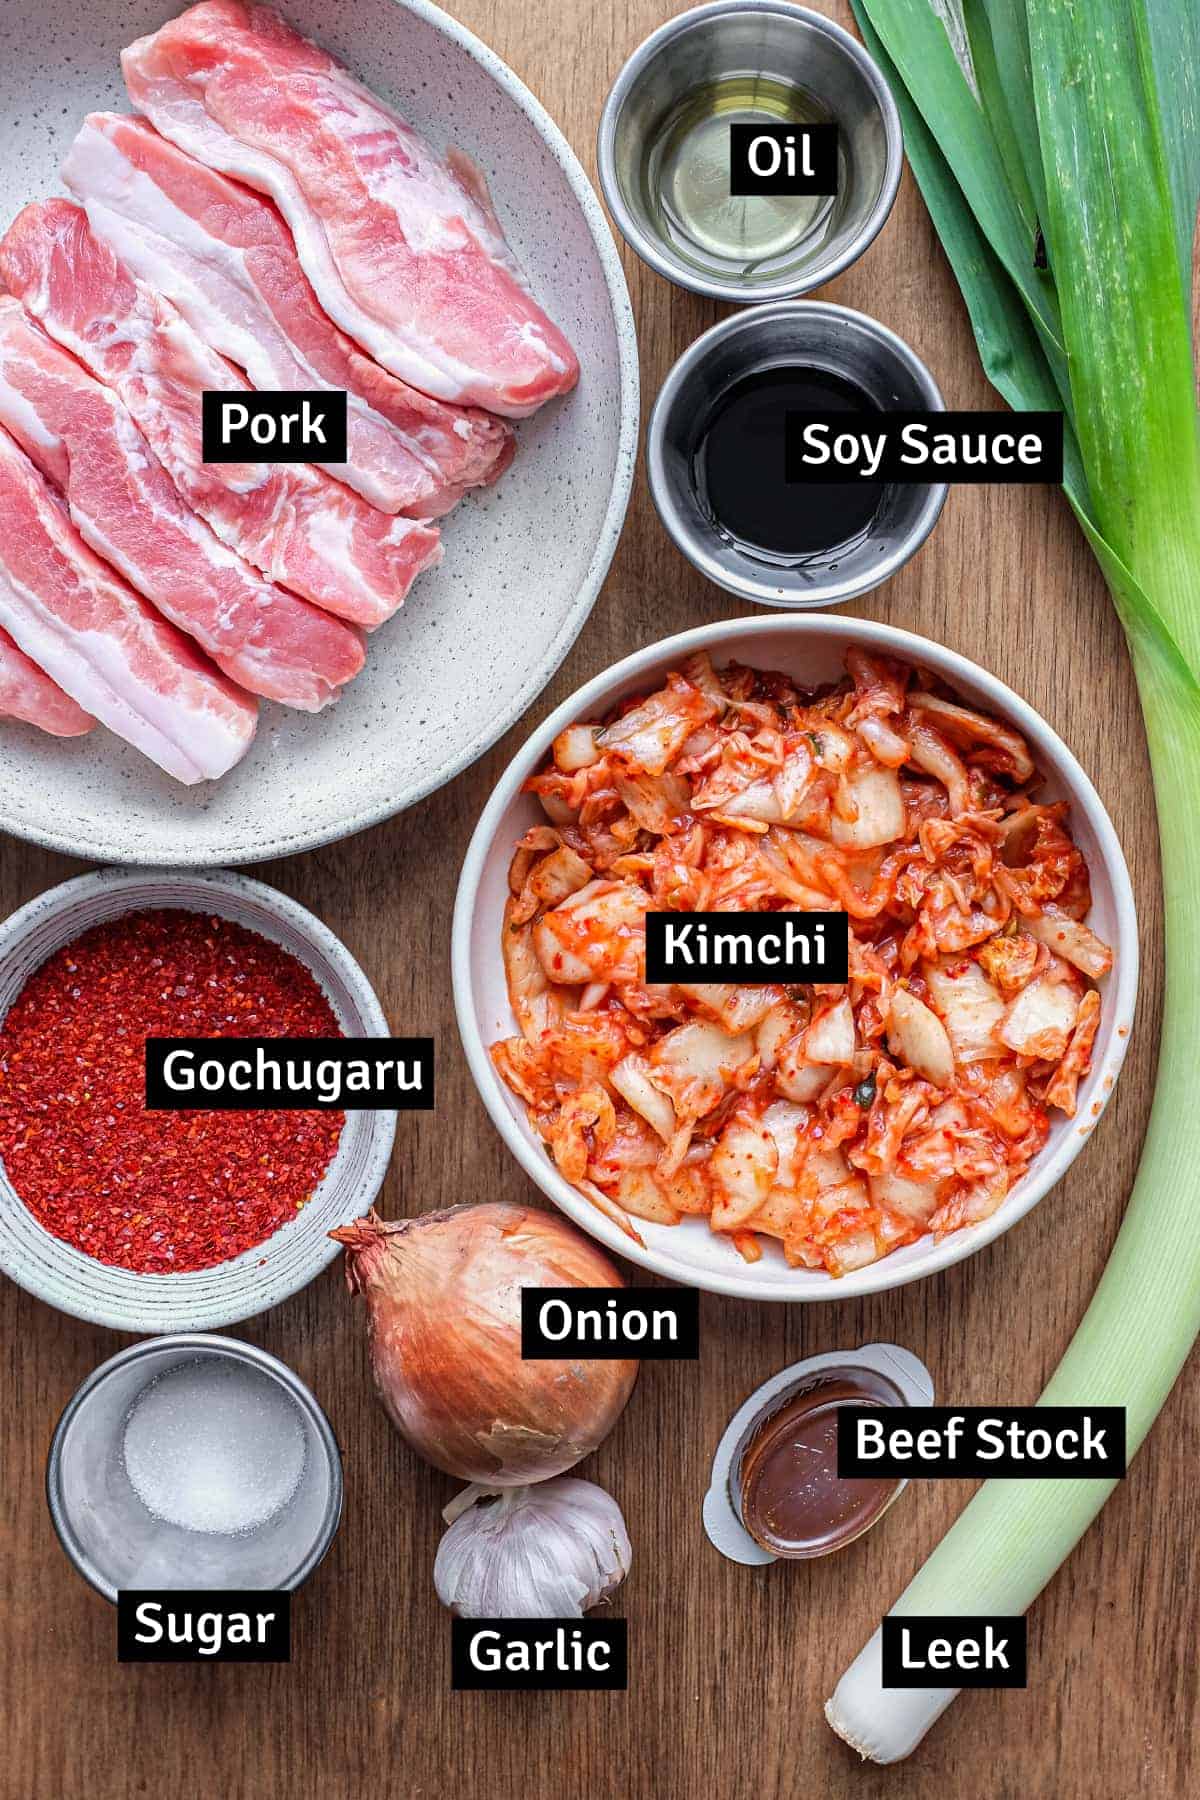 The ingredients for Korean kimchi pork stew: kimchi, pork belly, gochugaru chilli flakes, leek and more.